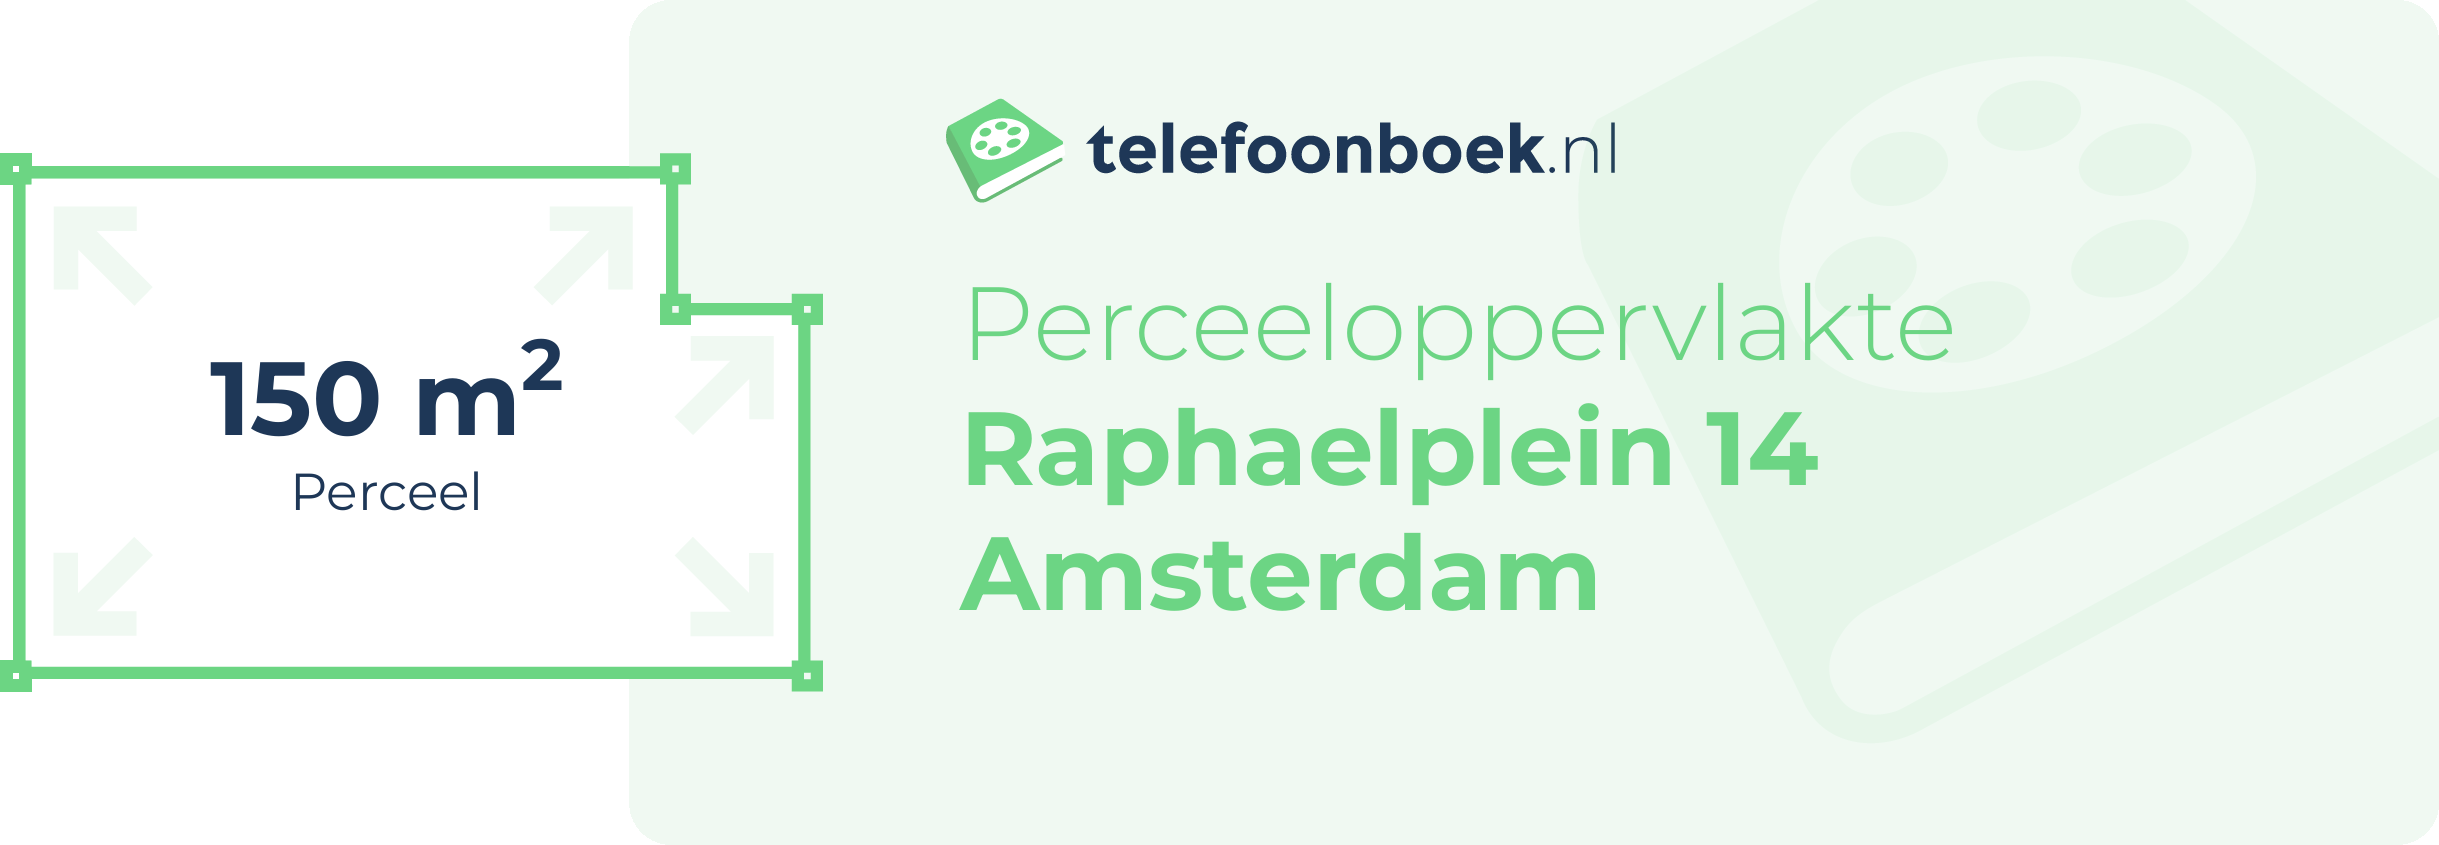 Perceeloppervlakte Raphaelplein 14 Amsterdam